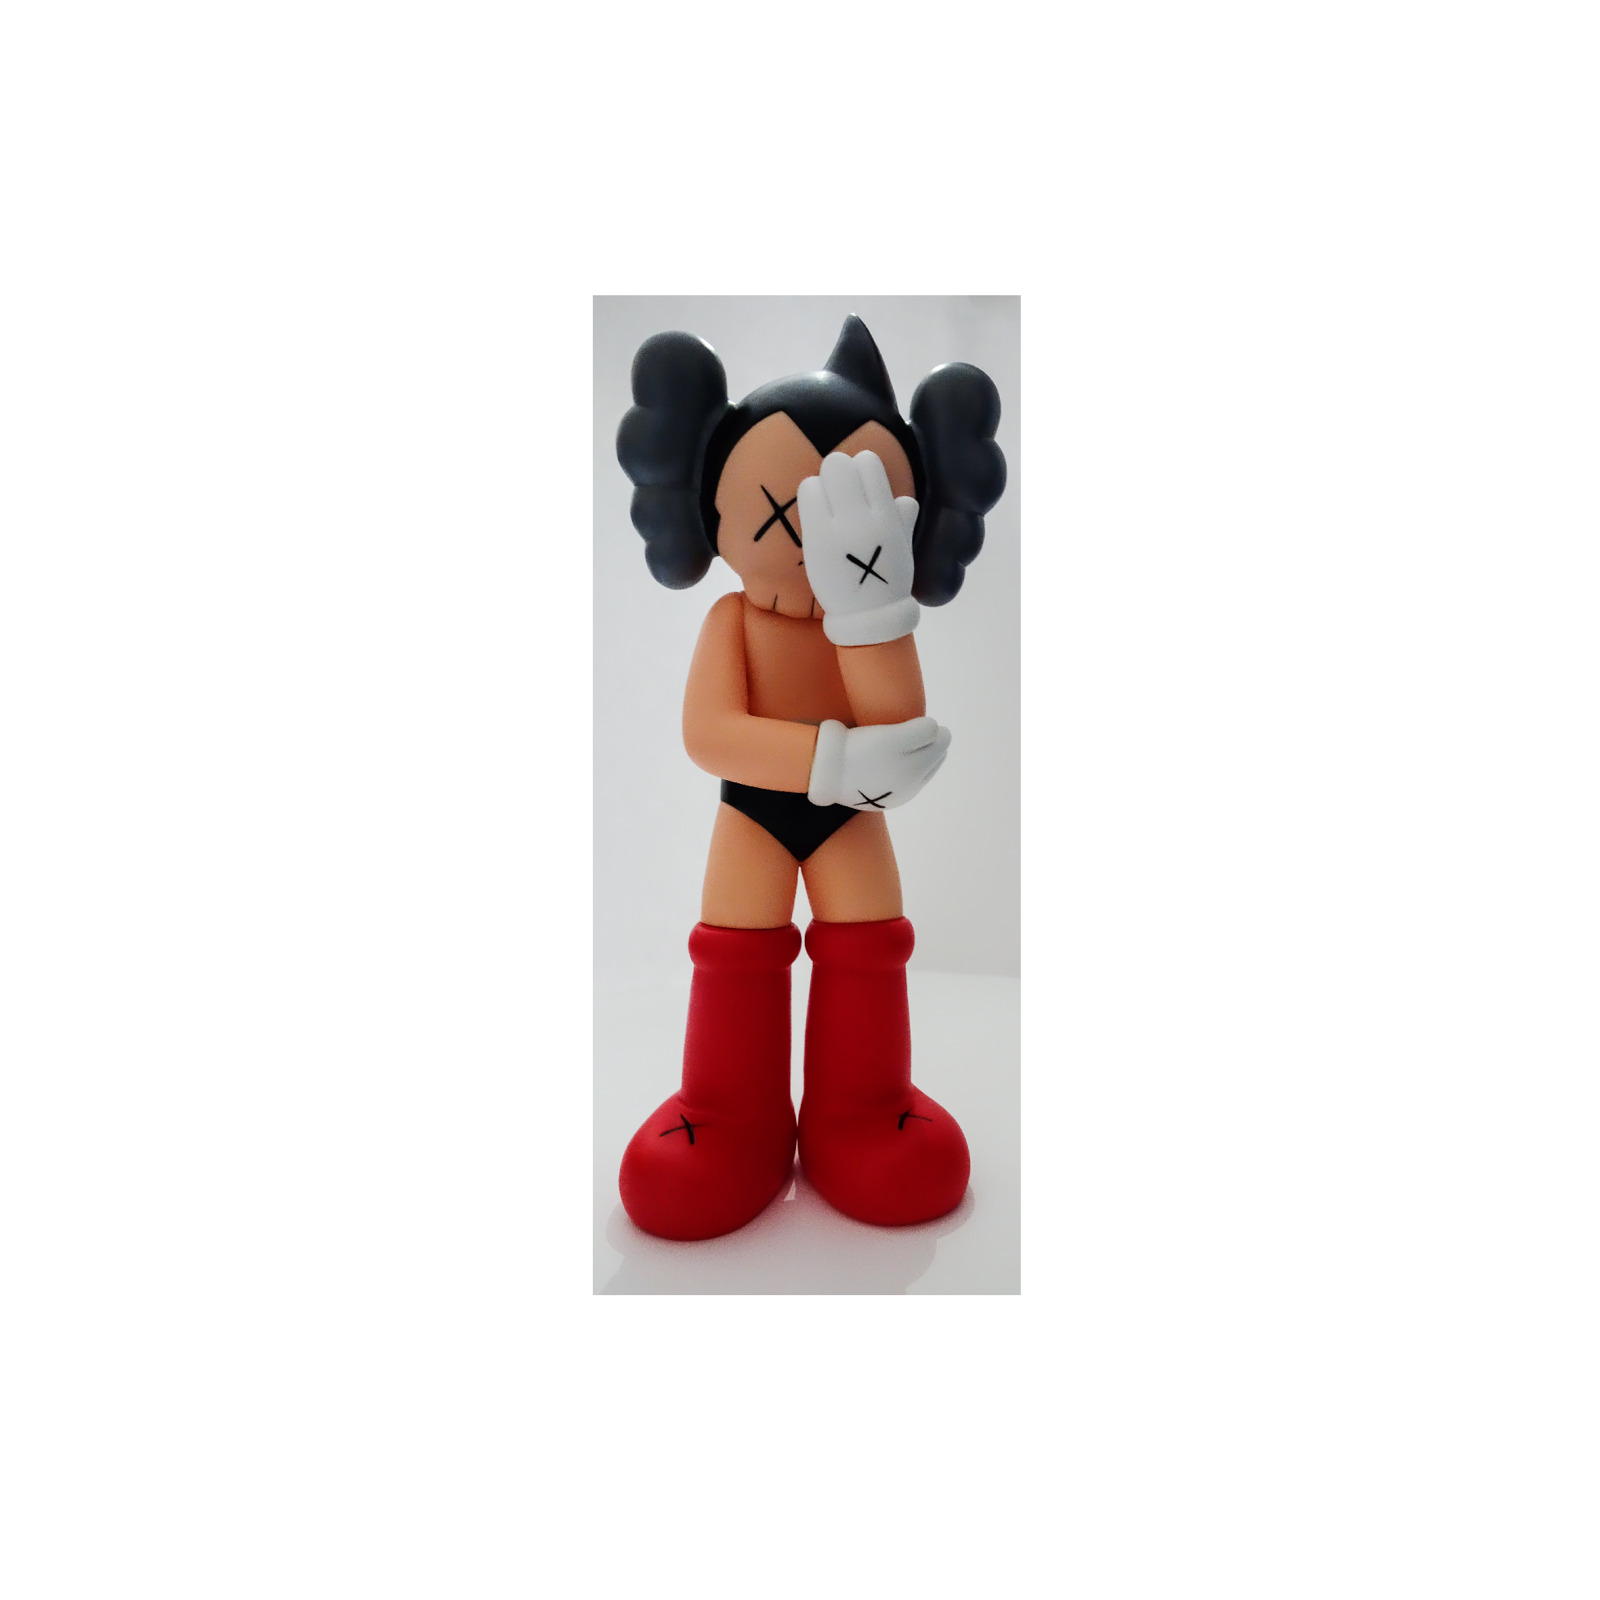 KAWS Astro Boy (2012) - Medicon Toy - Red (14.5 inch Tall)